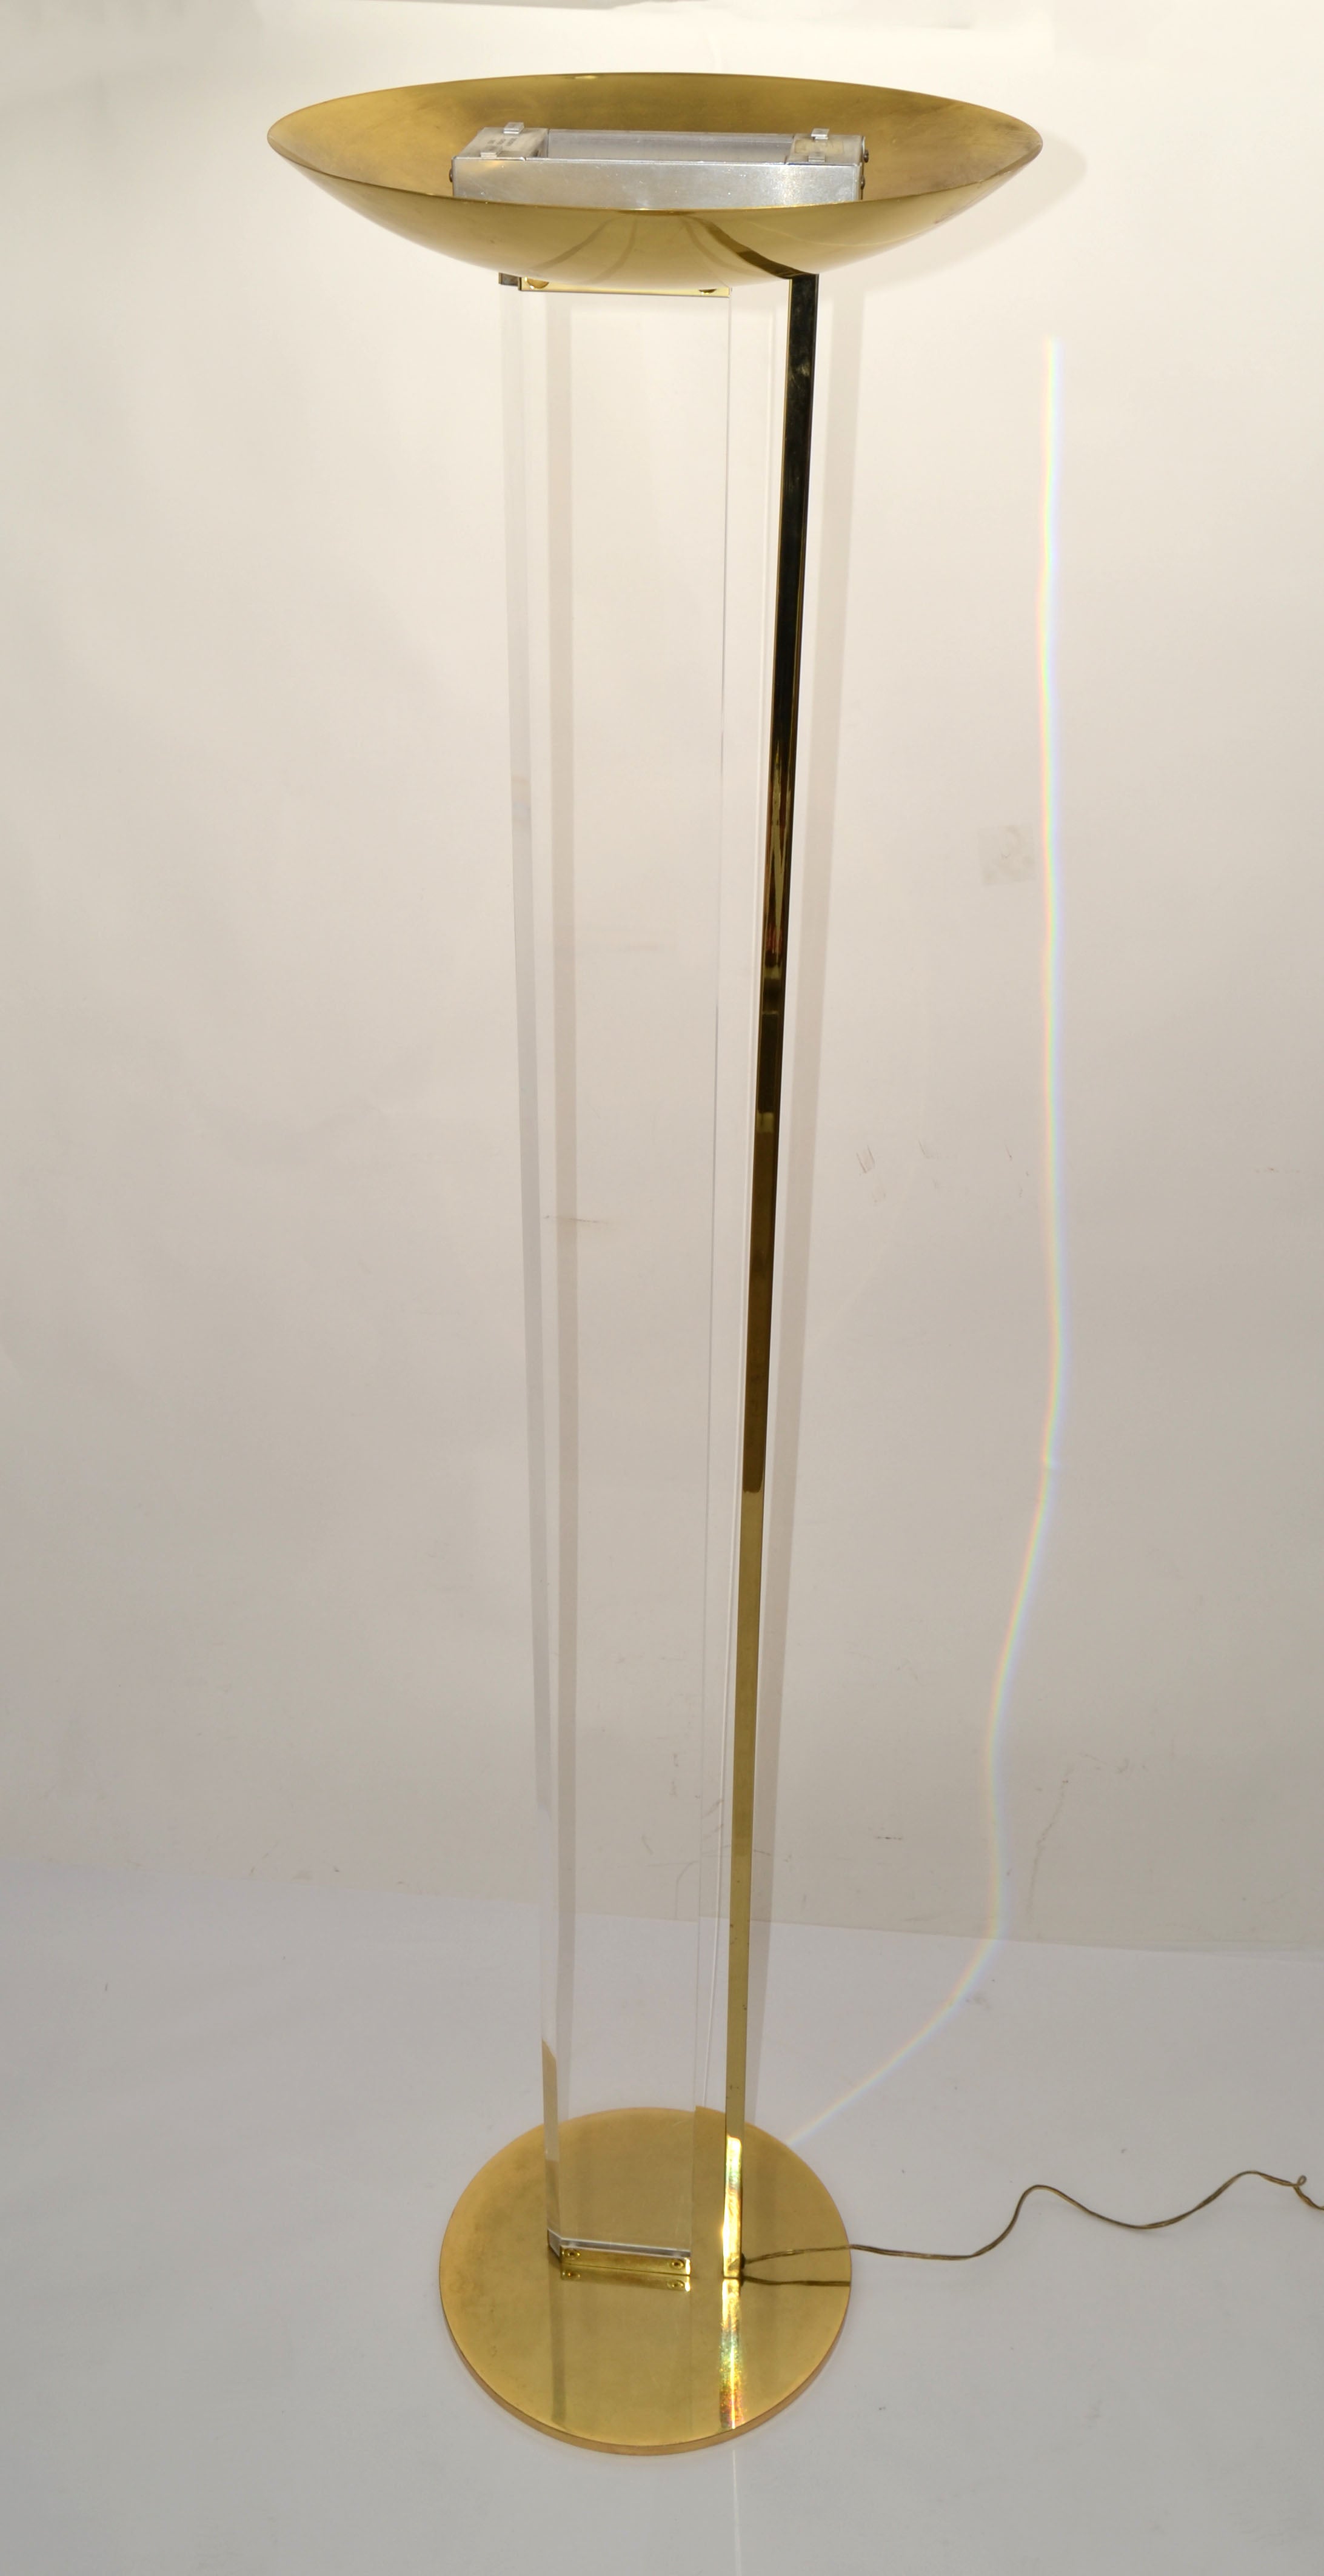 American Fredrick Ramond Uplighter Lucite Brass Tall Floor Lamp Mid-Century Modern 1986 For Sale